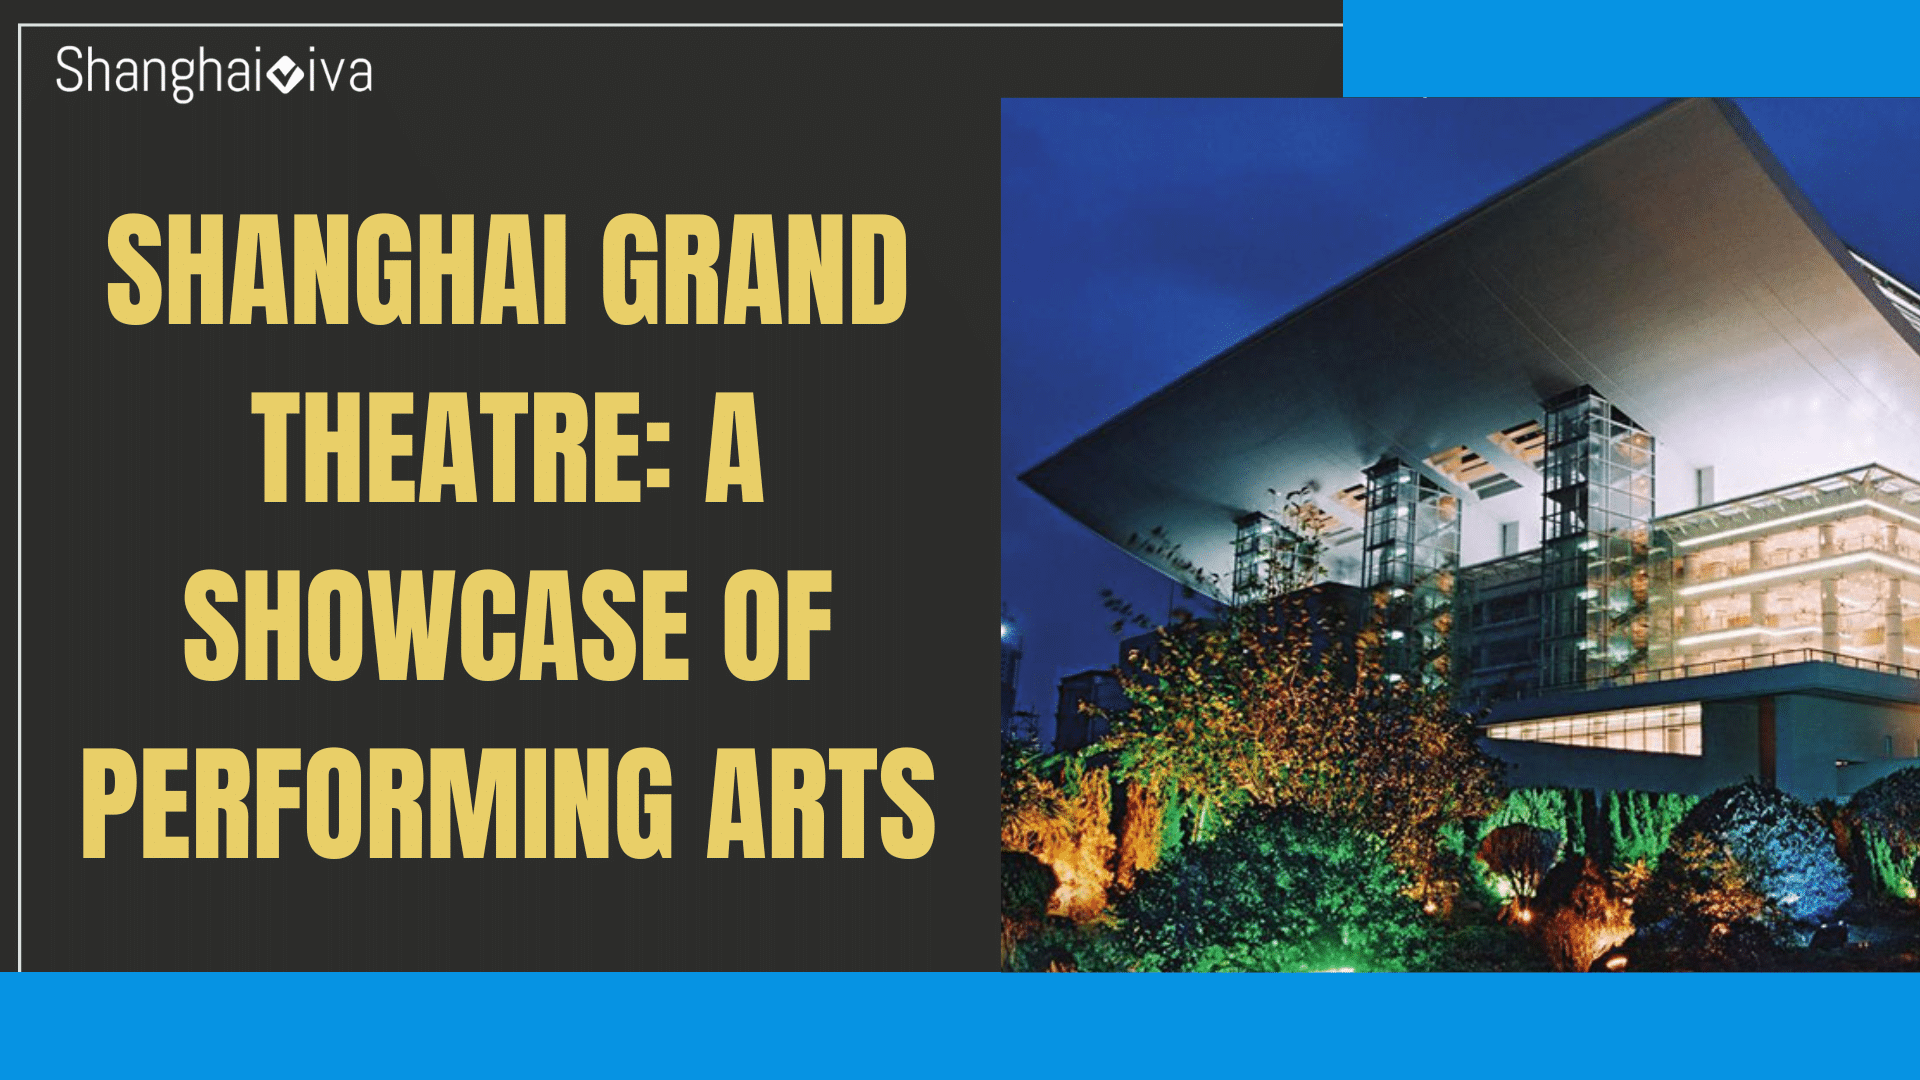 Shanghai Grand Theatre: A Showcase of Performing Arts